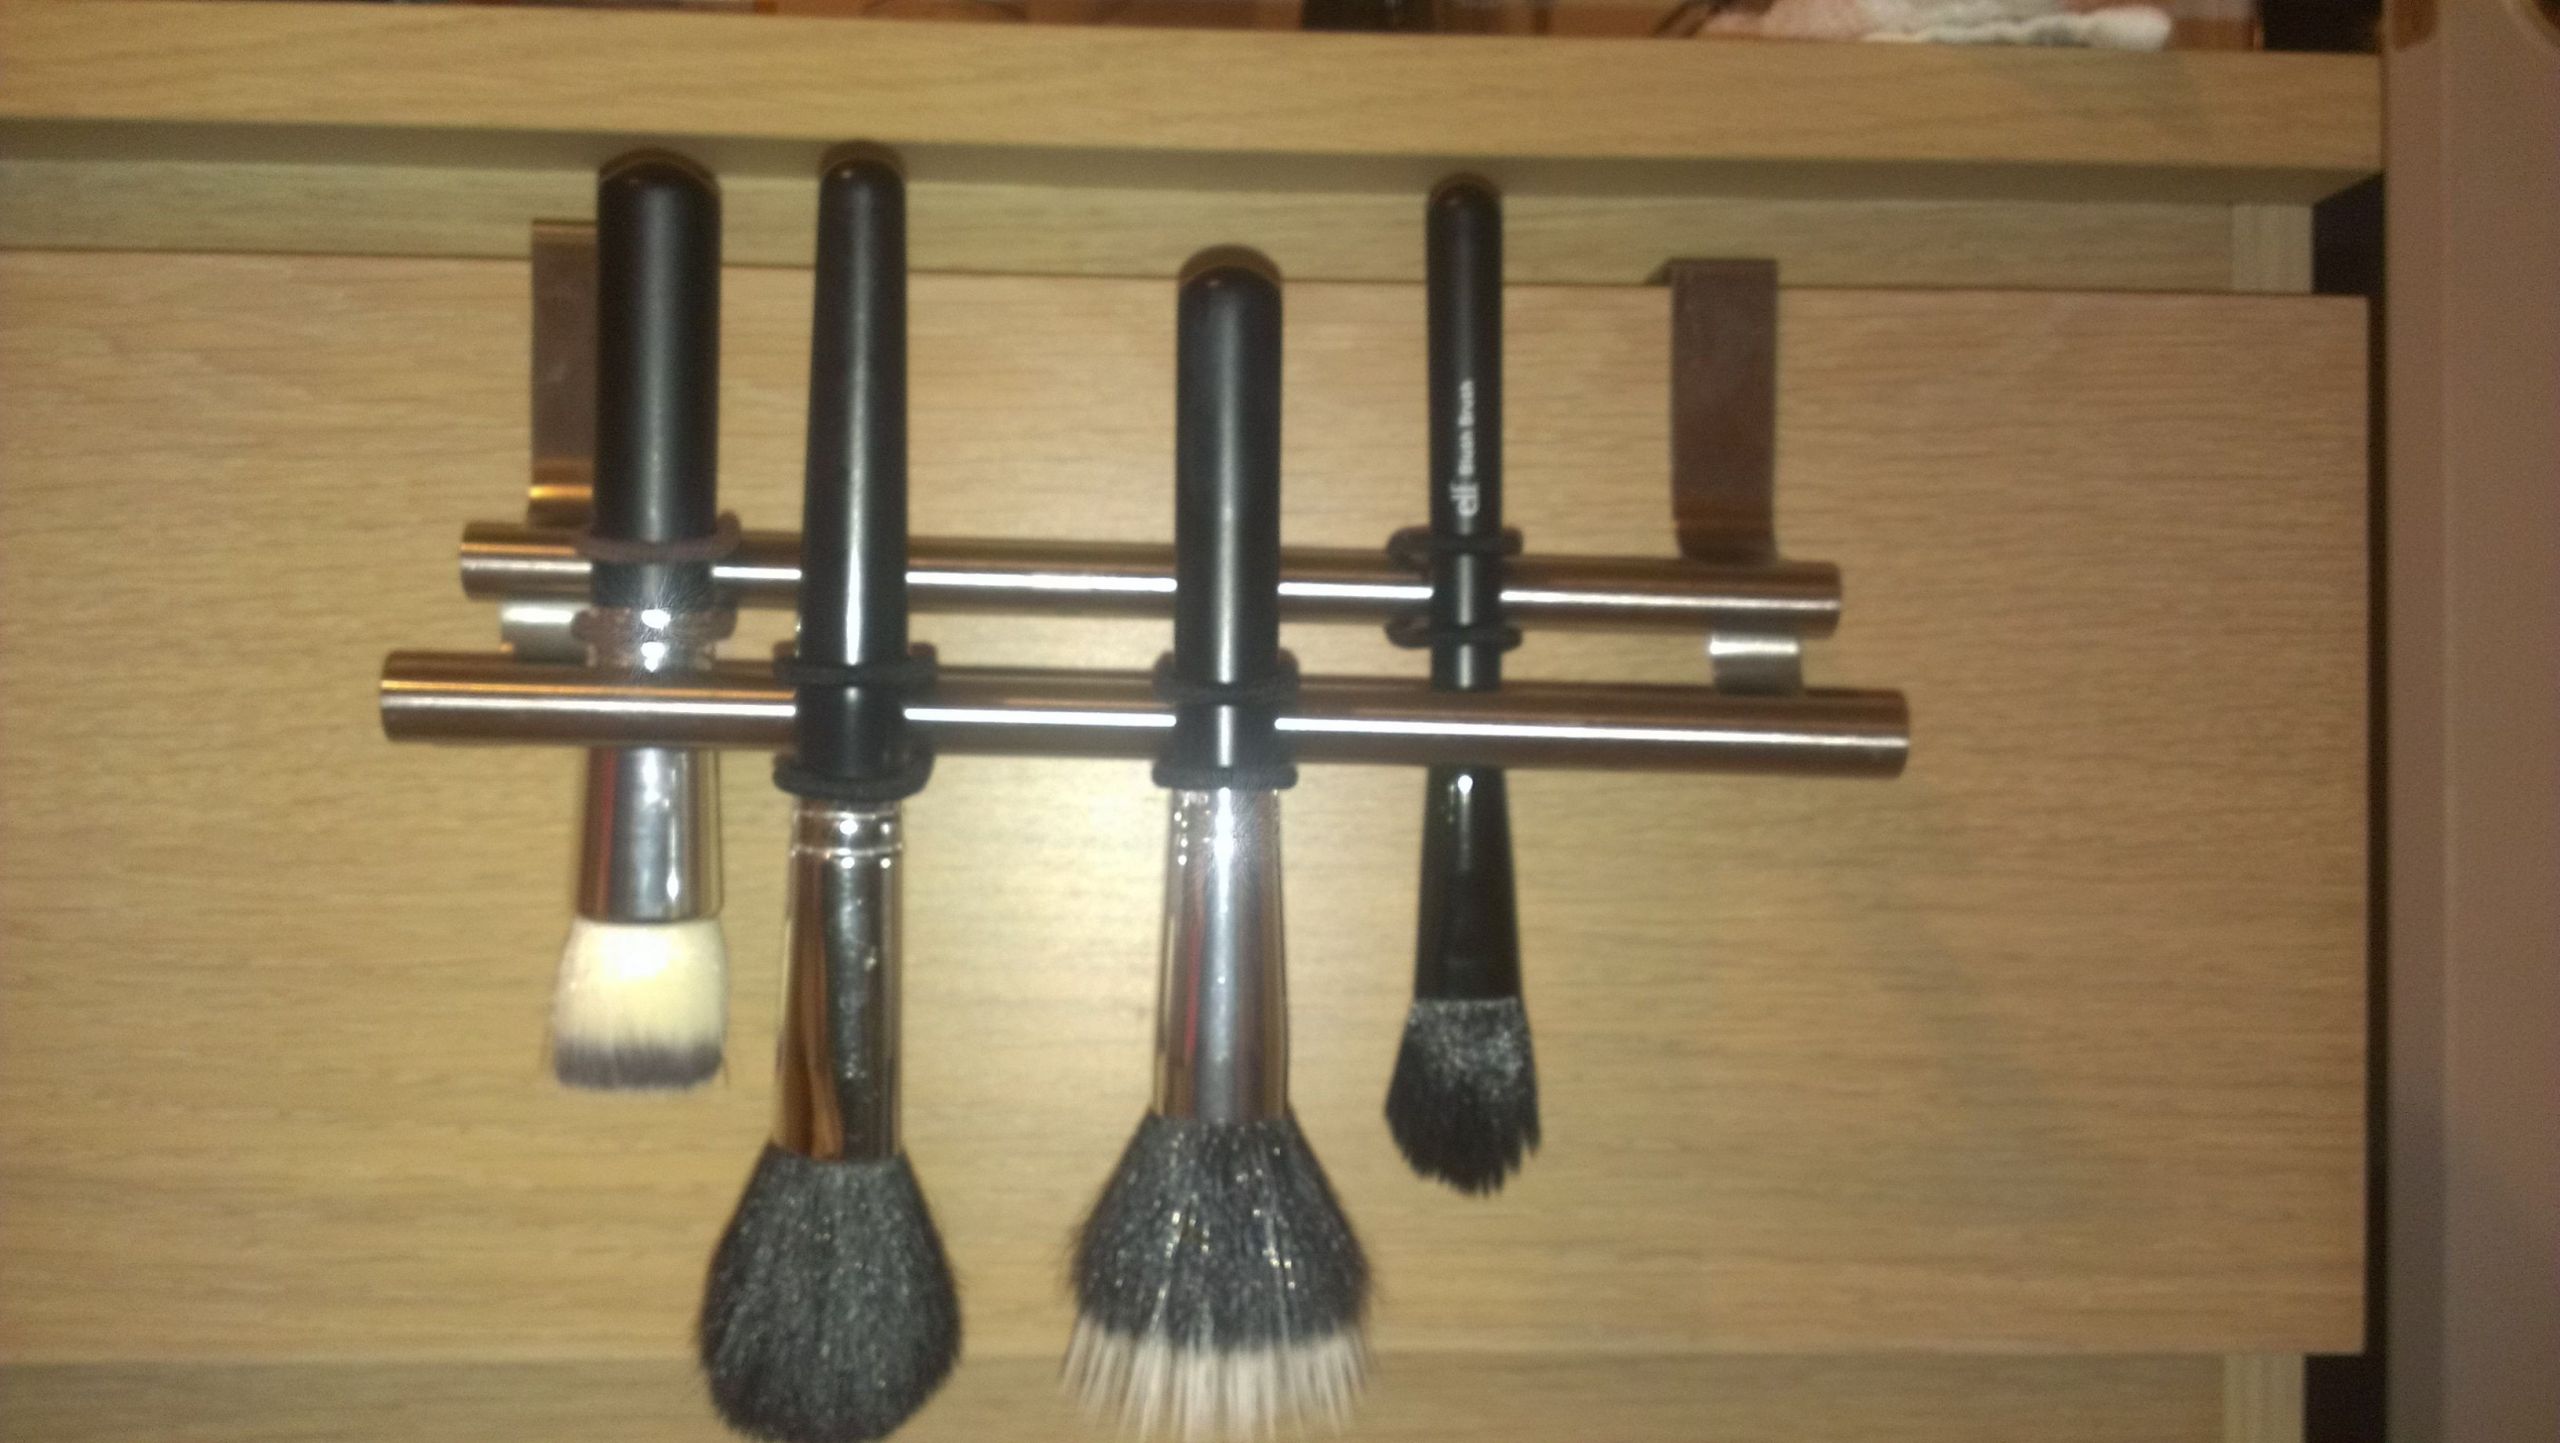 DIY Makeup Brush Drying Rack
 diy makeup brush drying rack